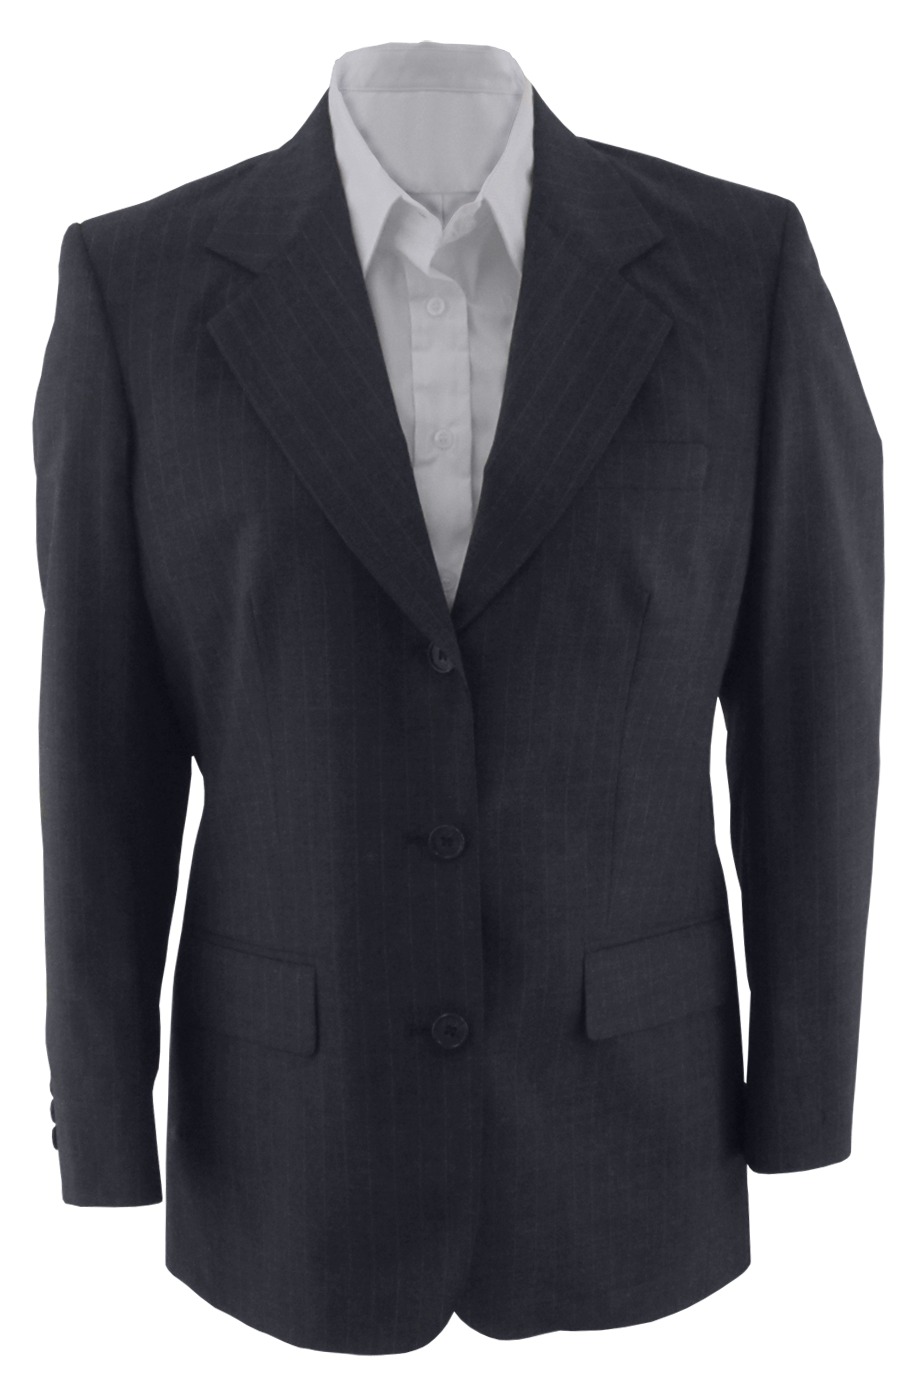 Edwards Garment 6660 - Women's Pinstripe Wool Blend Suit Coat